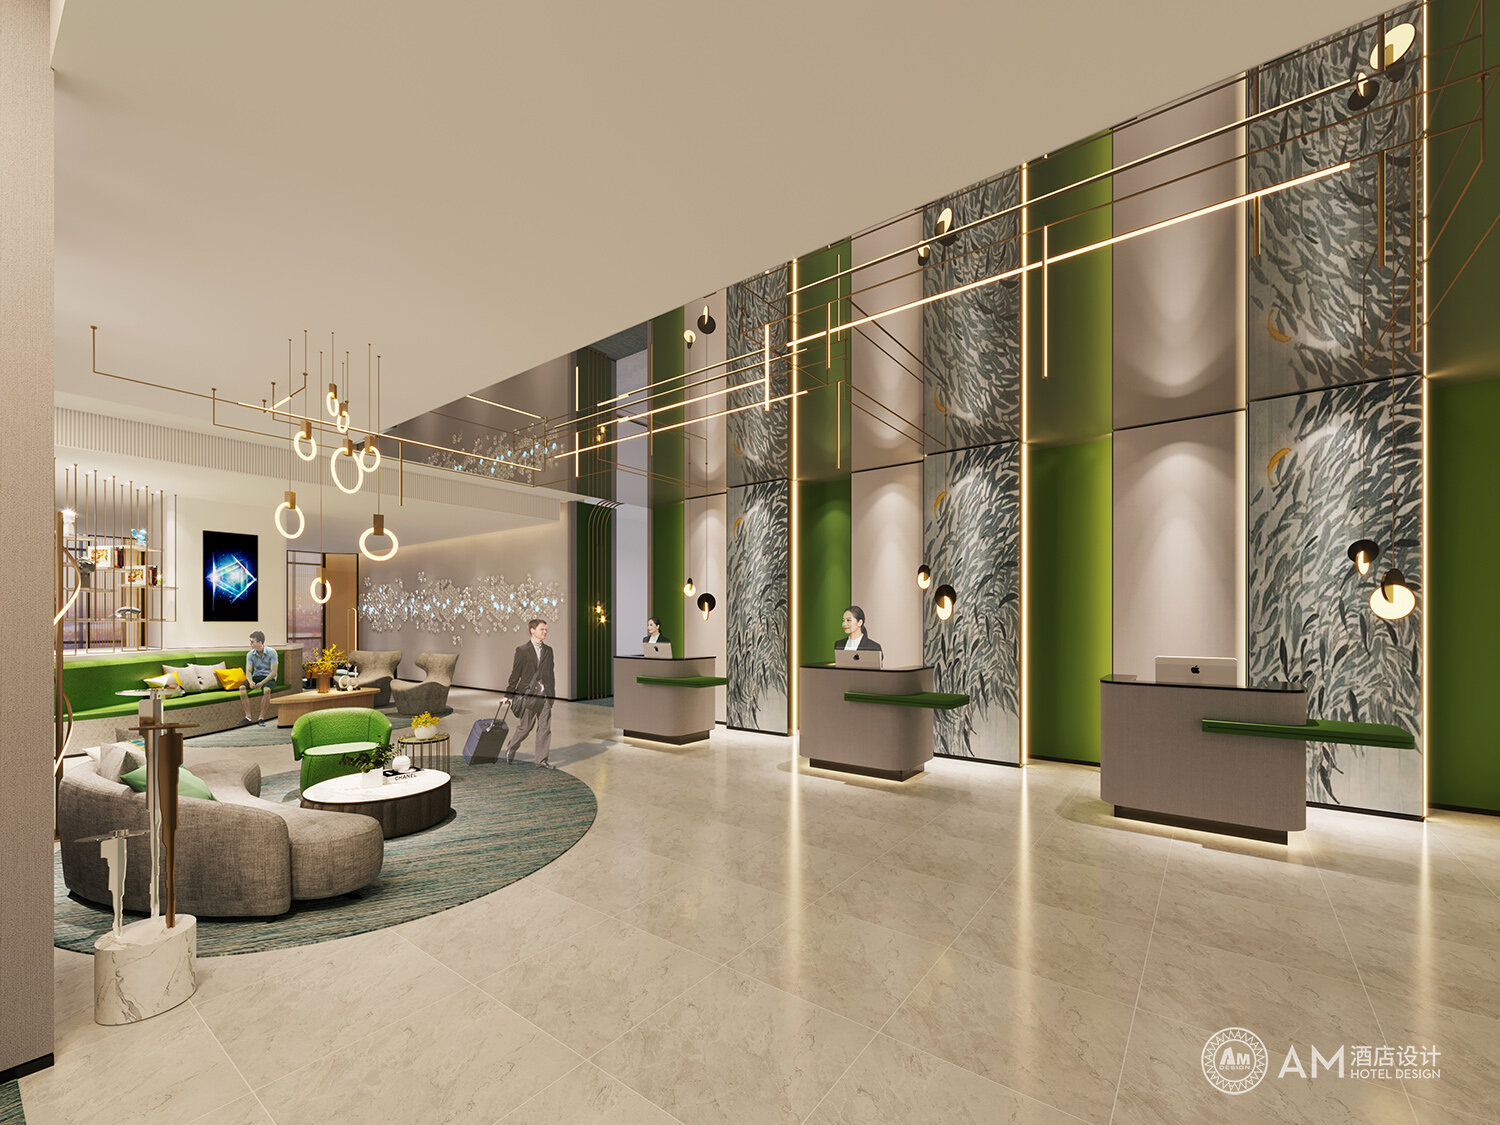 AM DESIGN | Lobby Design of Jianguo Hotel, Weinan, Shaanxi